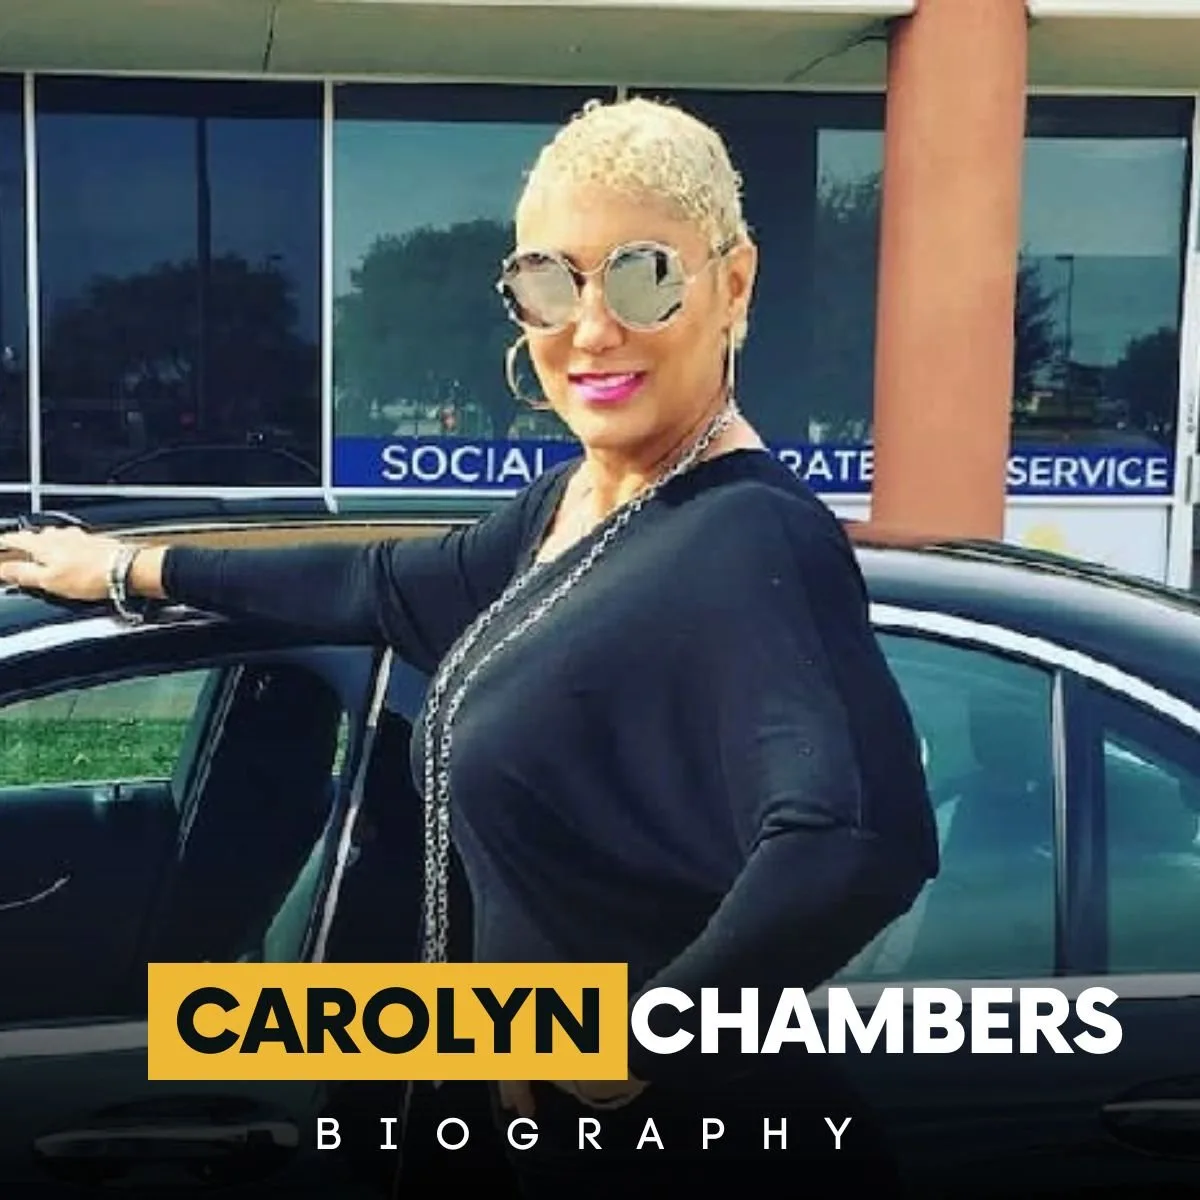 Carolyn Chambers Biography